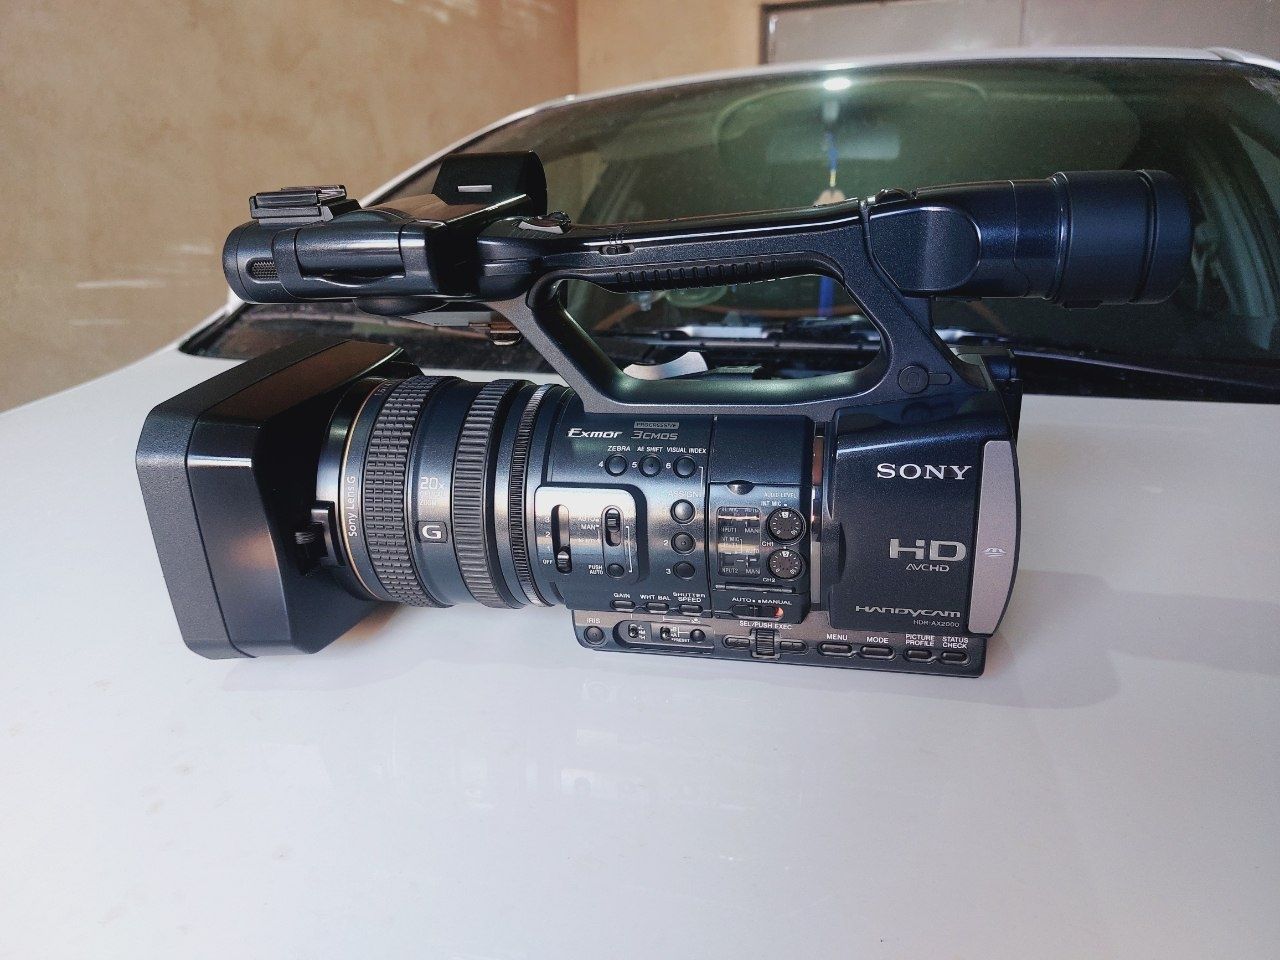 HDR-AX 2000 kamera